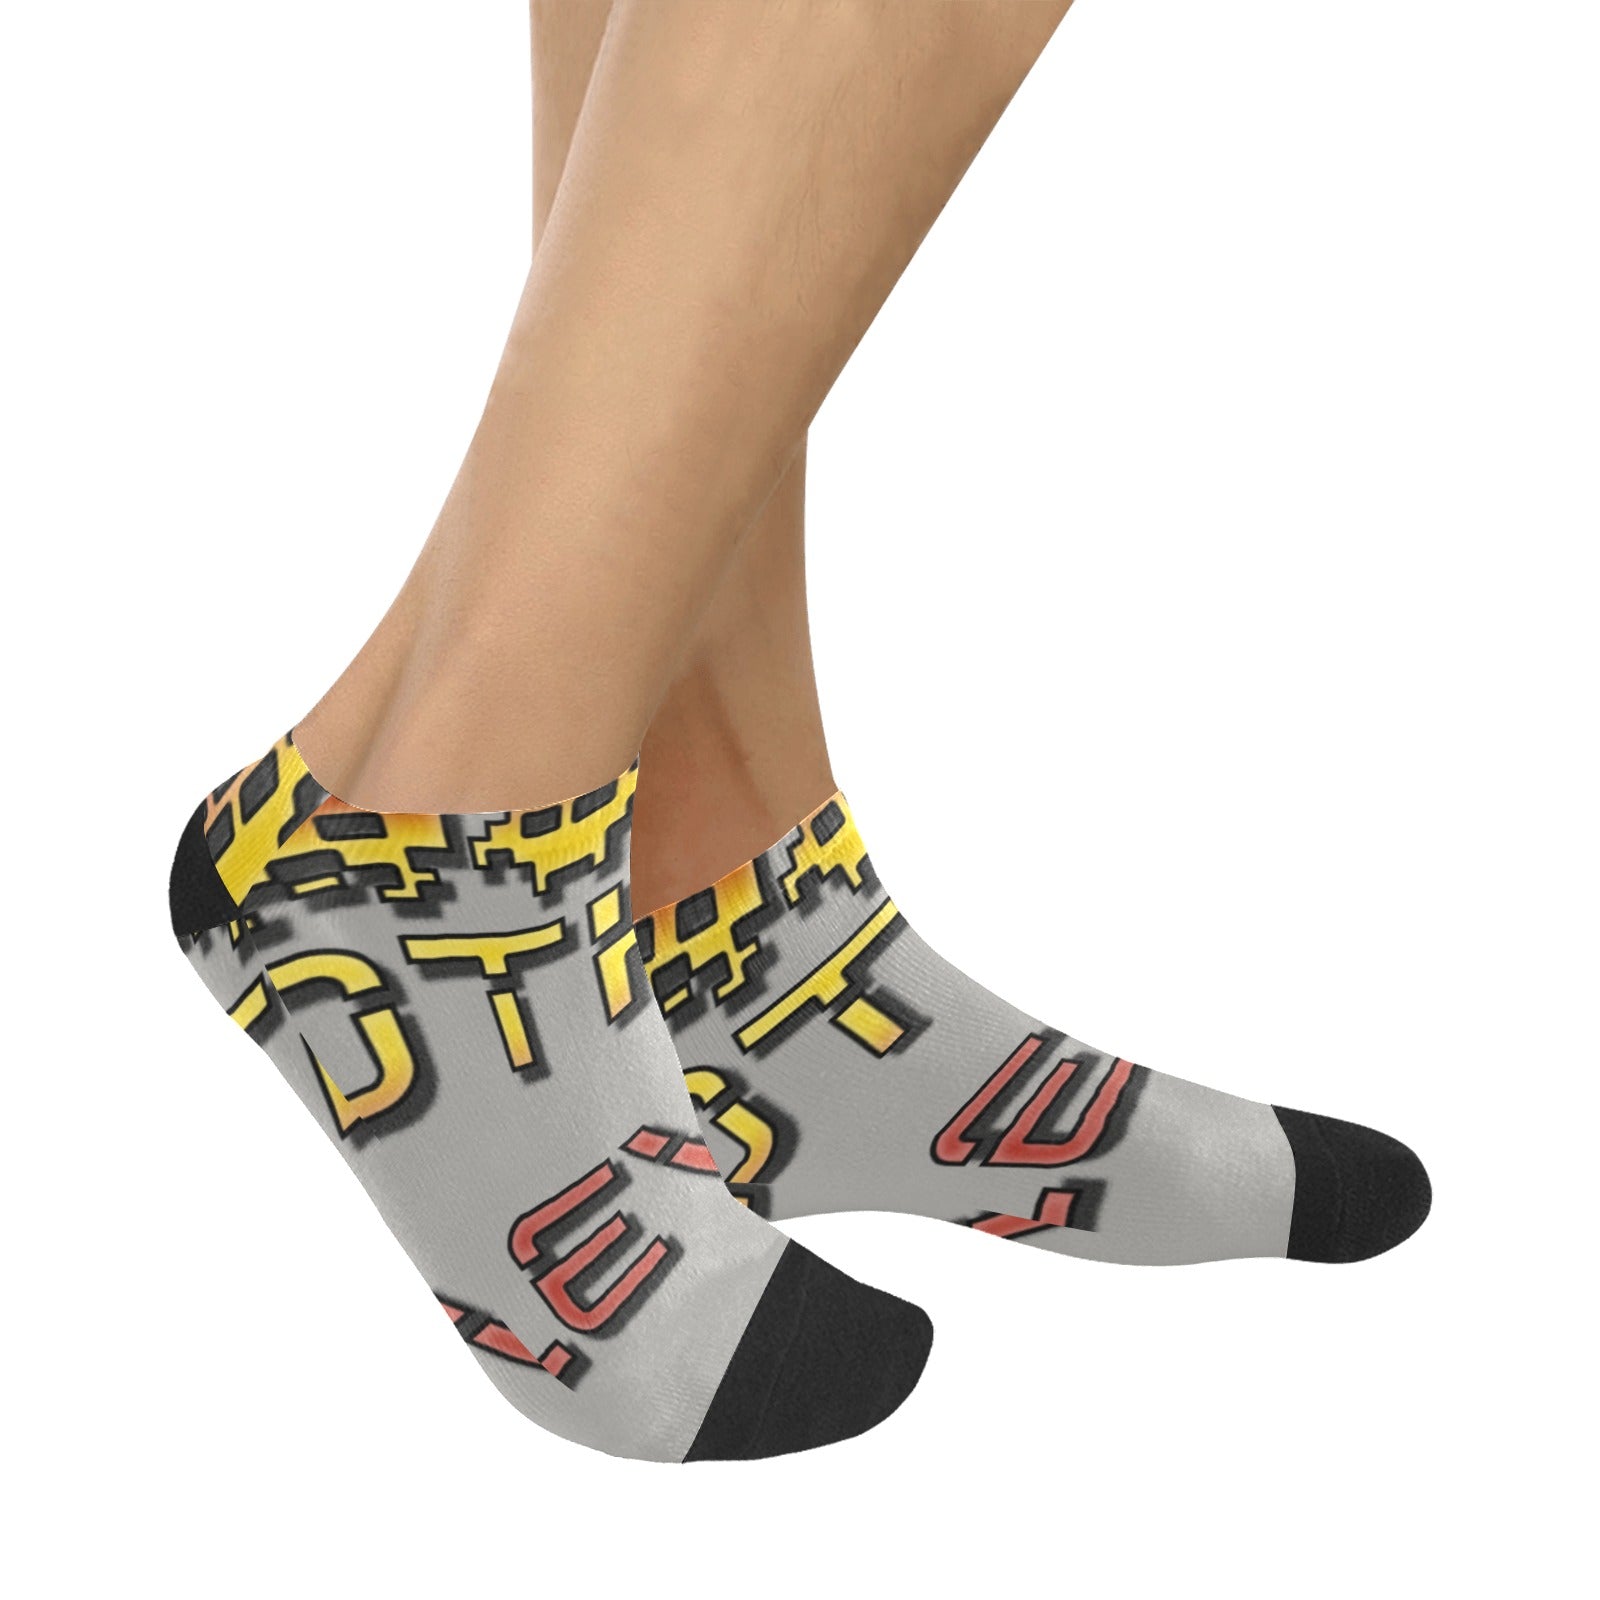 fz men's levels ankle socks one size / fz levels socks - grey men's ankle socks